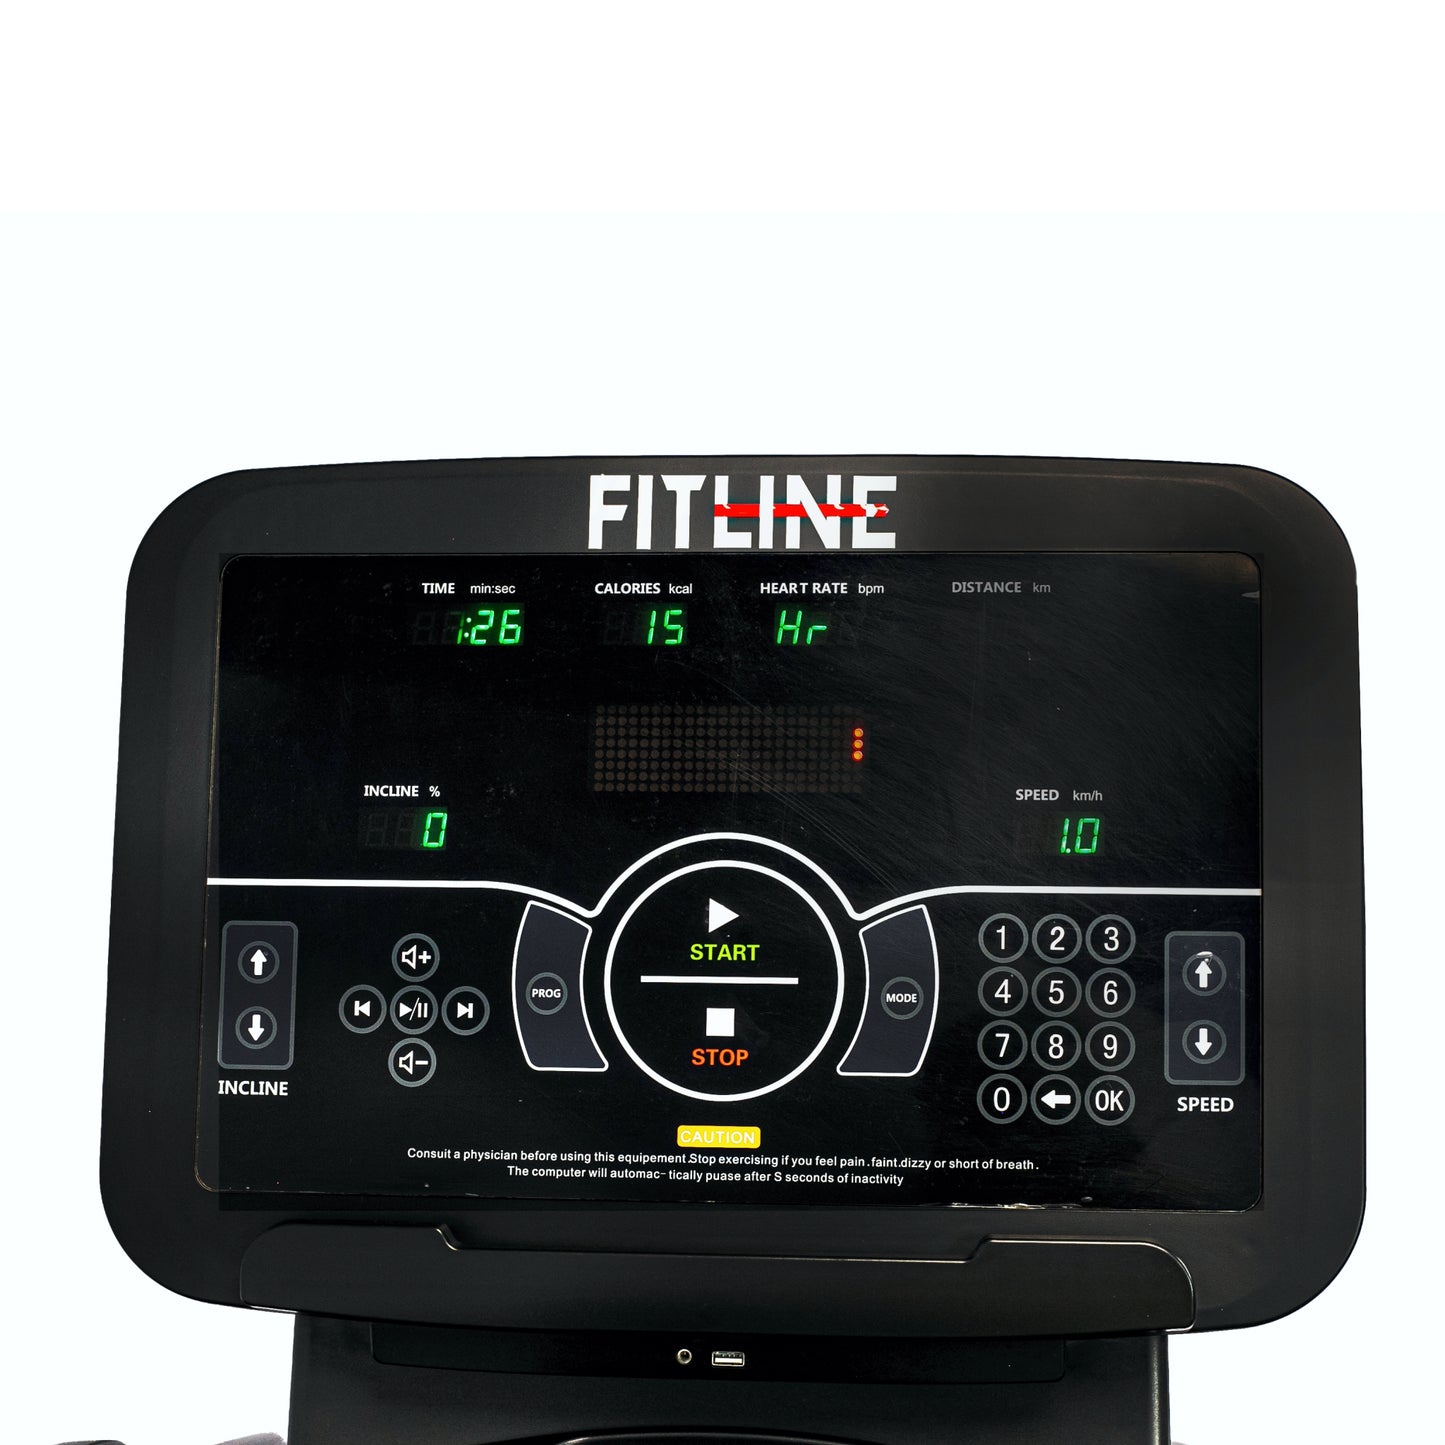 Speed_Treadmills- Cardio Exercise Fitness Equipment